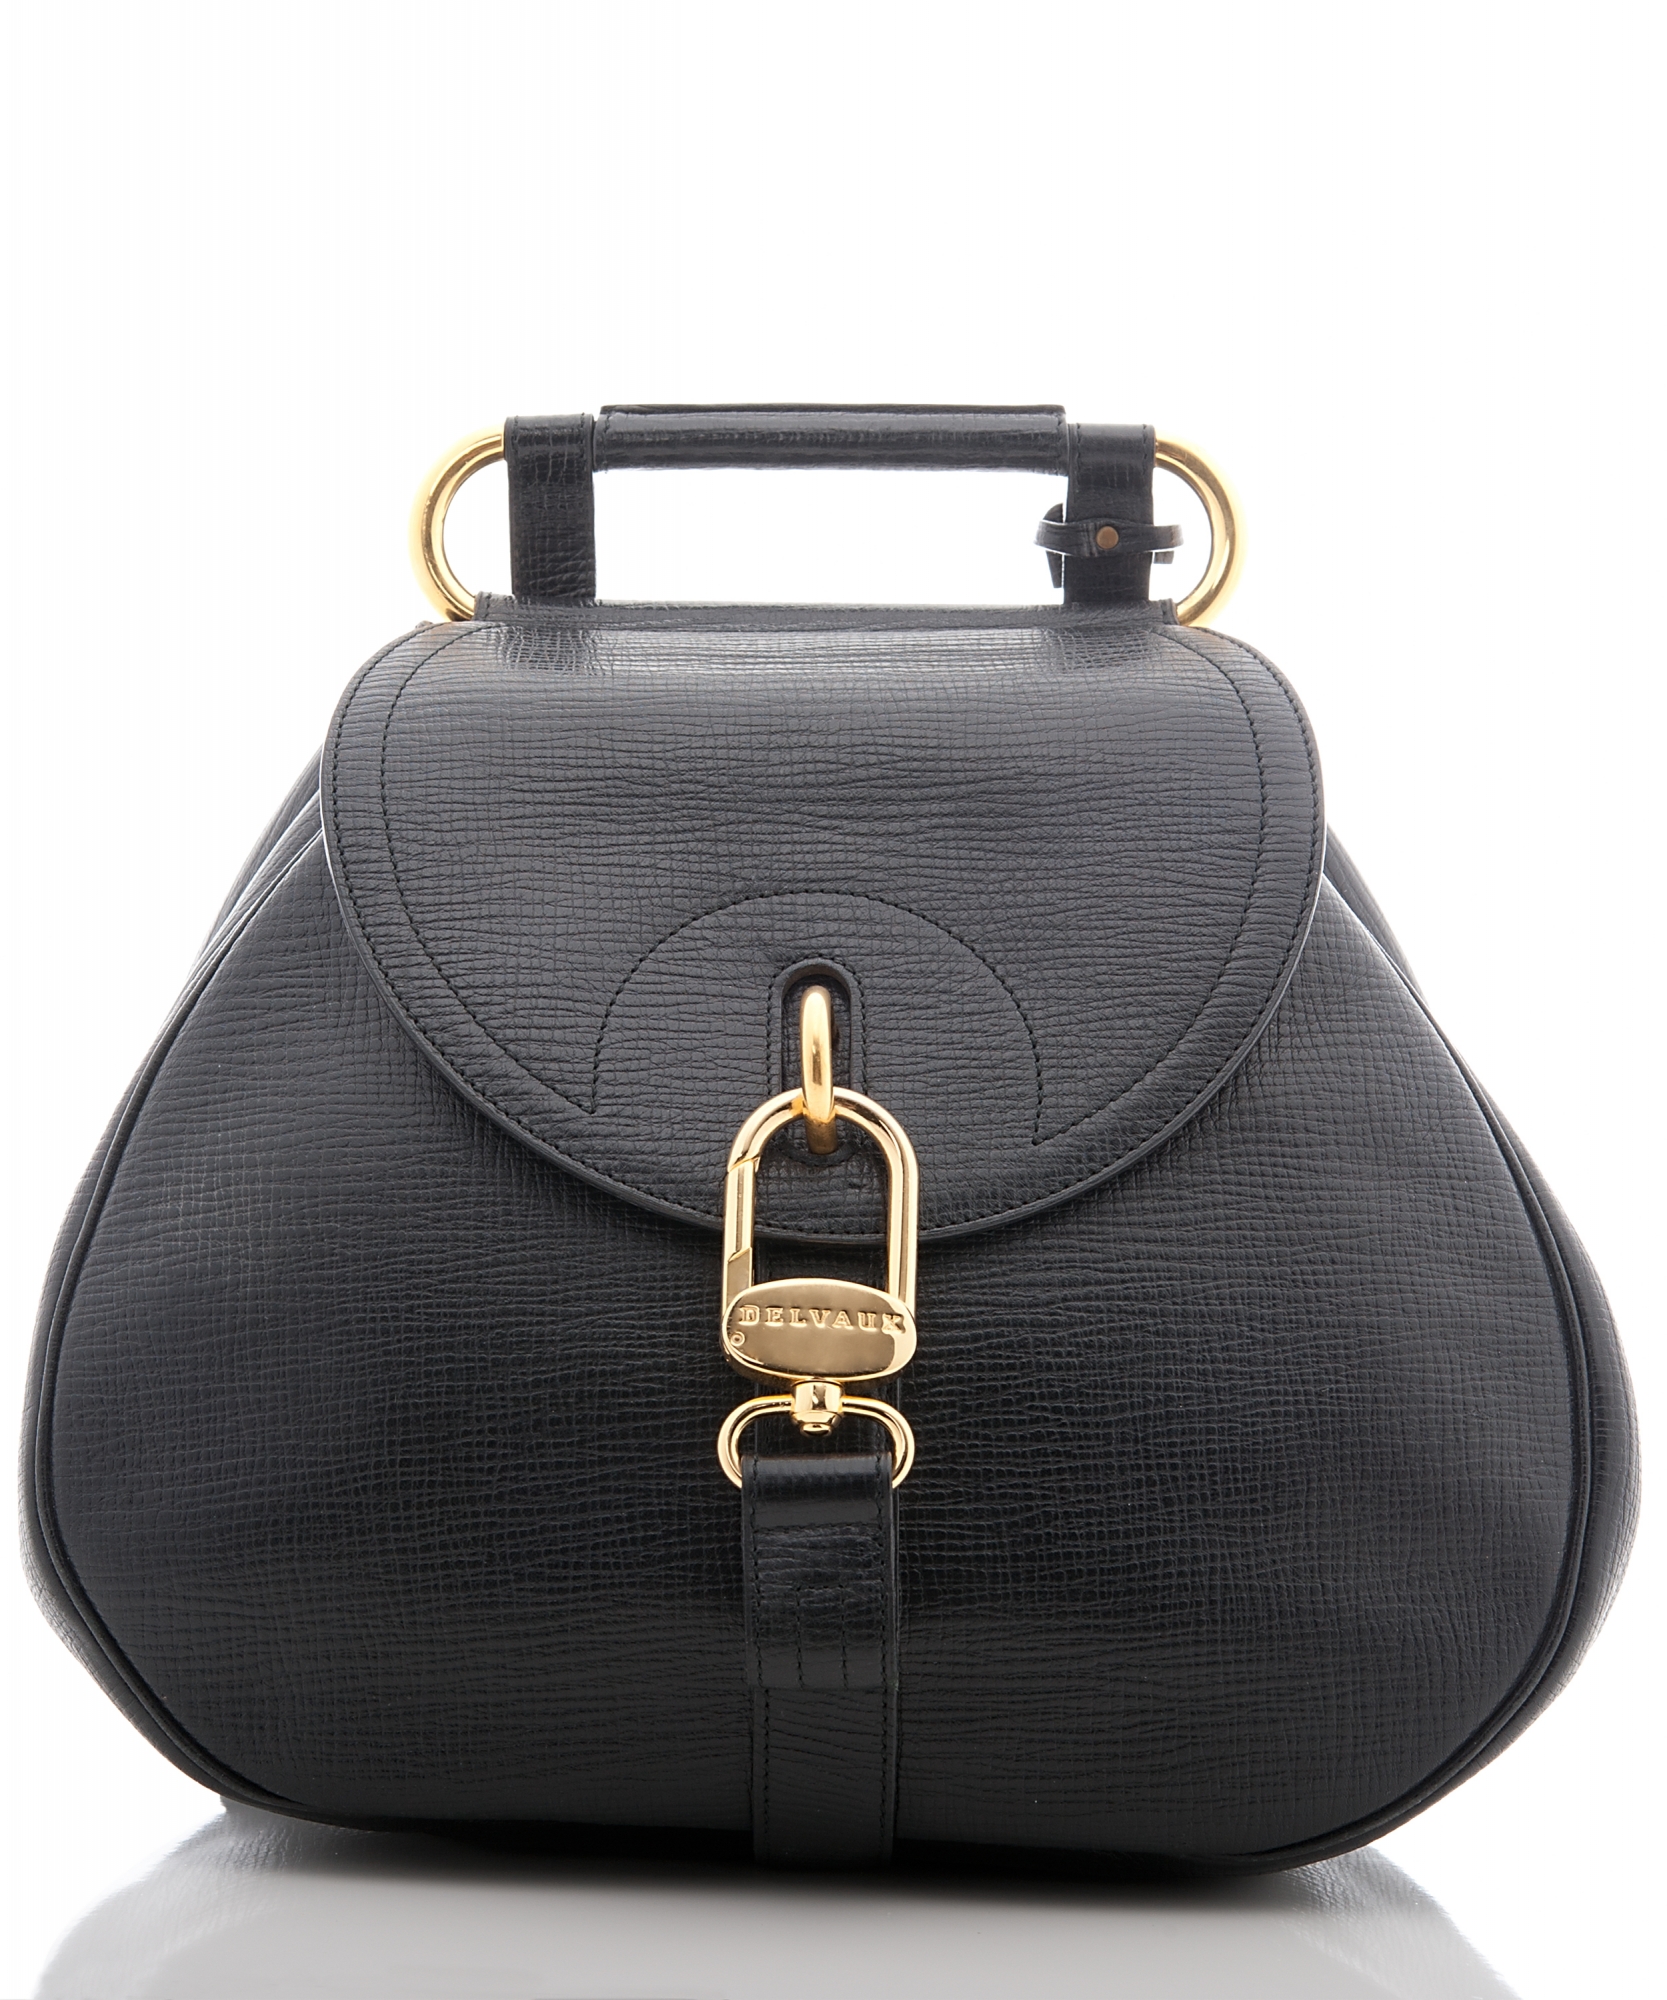 Delvaux Madame Bag Honest Review | I Make Leather Handbags